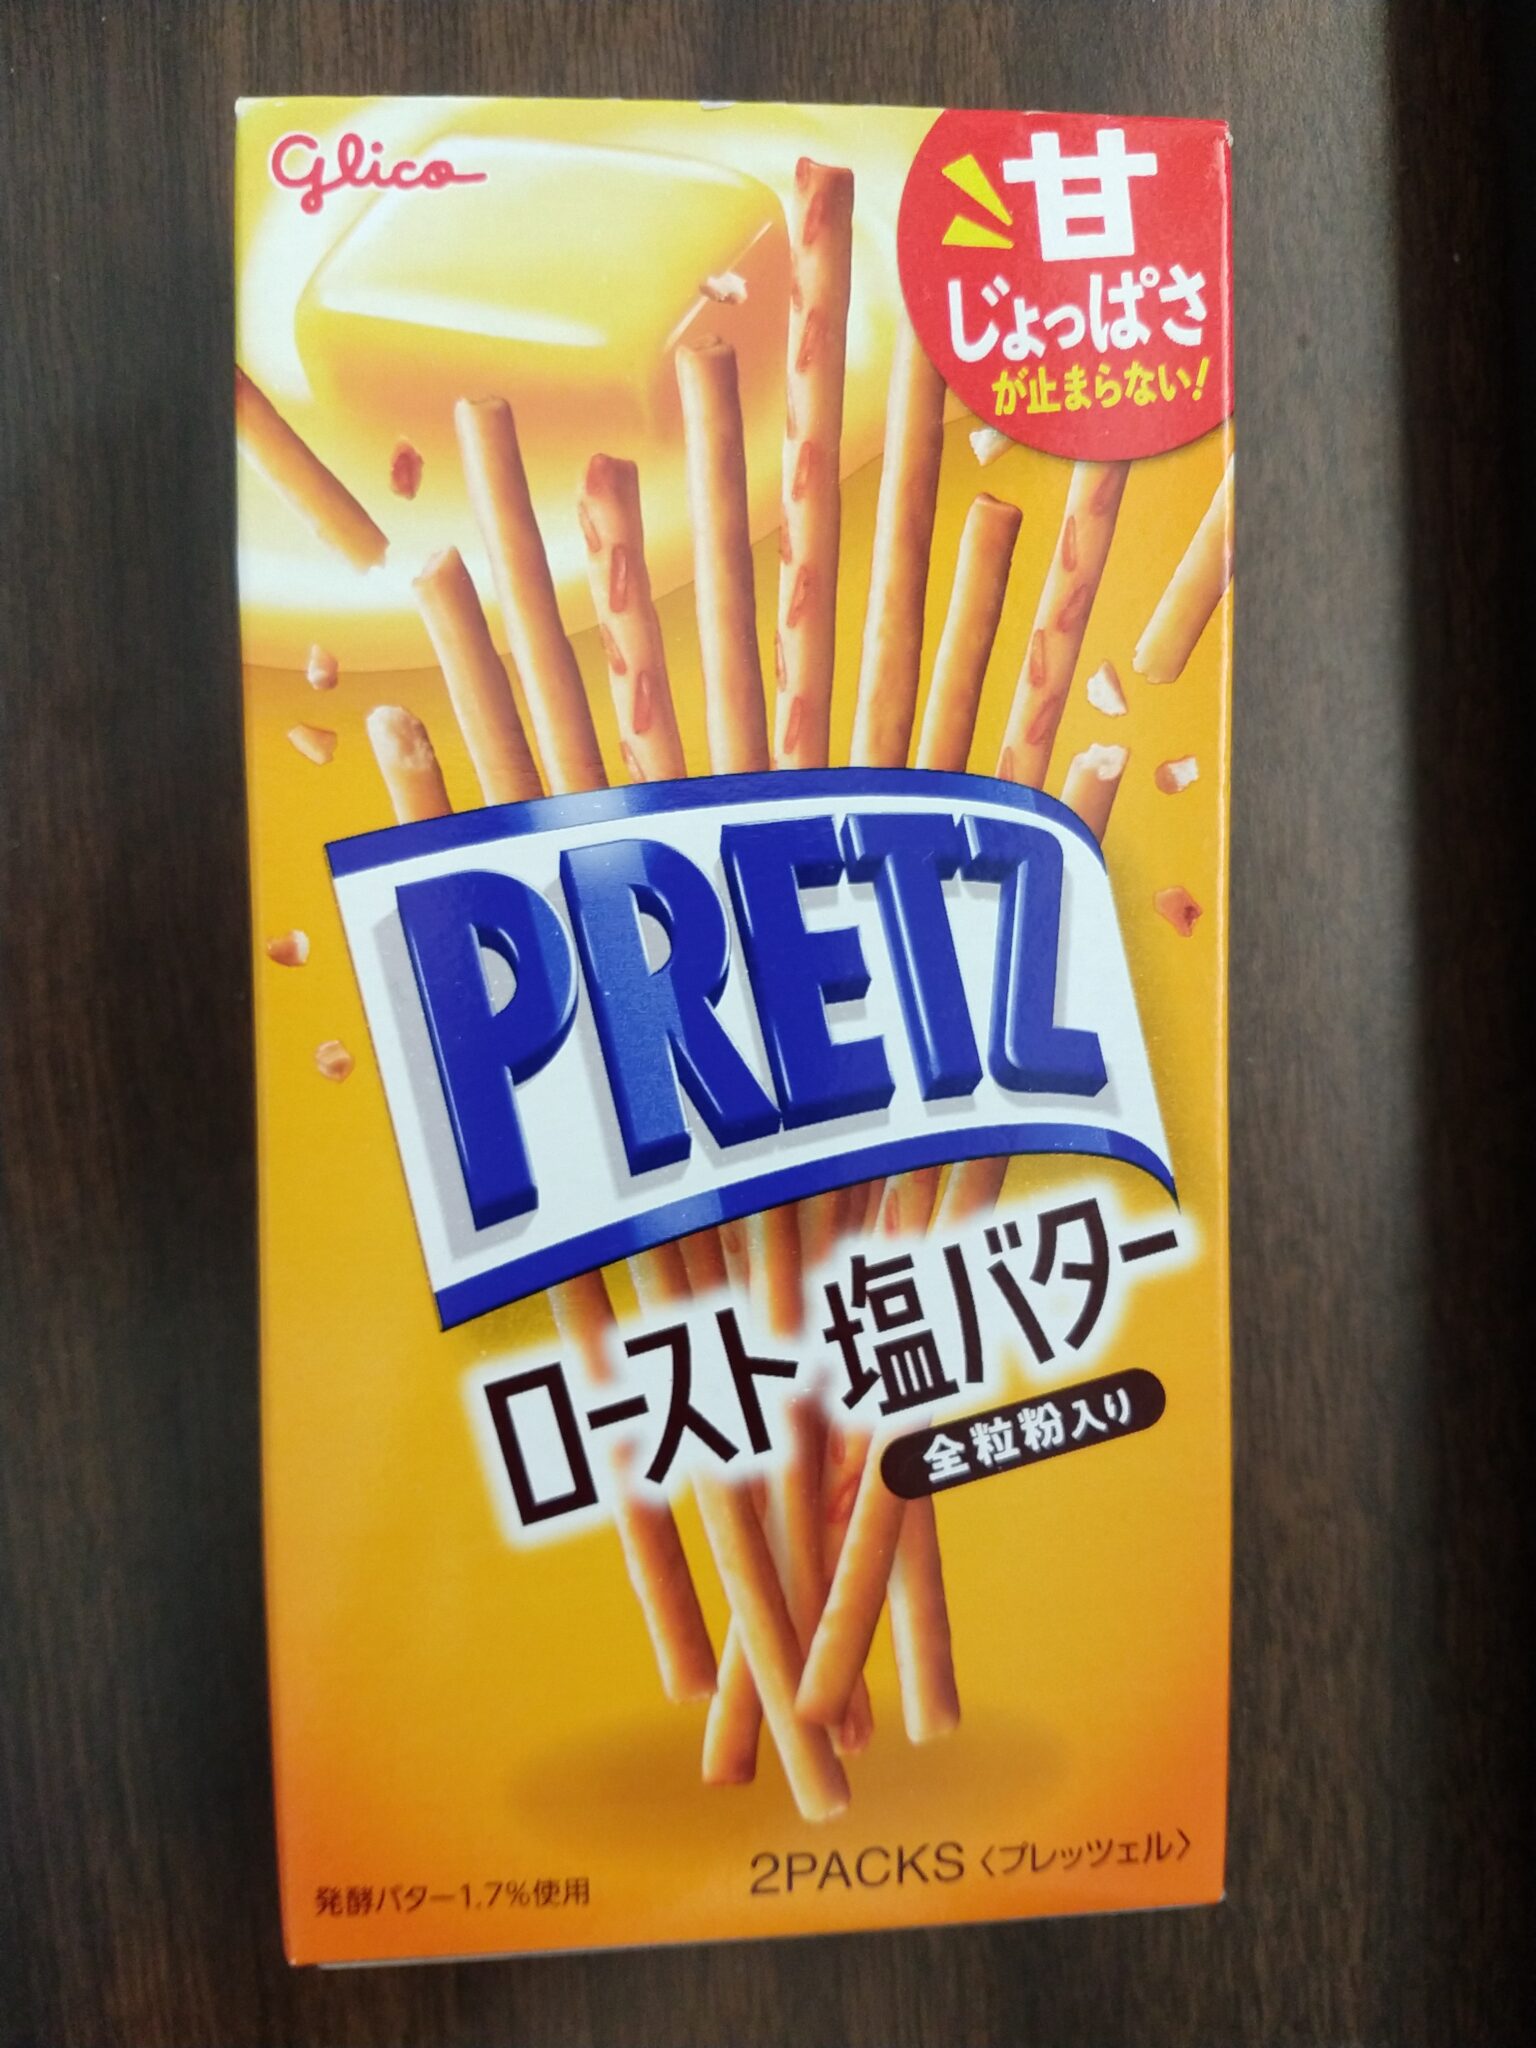 Pretz – Roasted Salted Butter